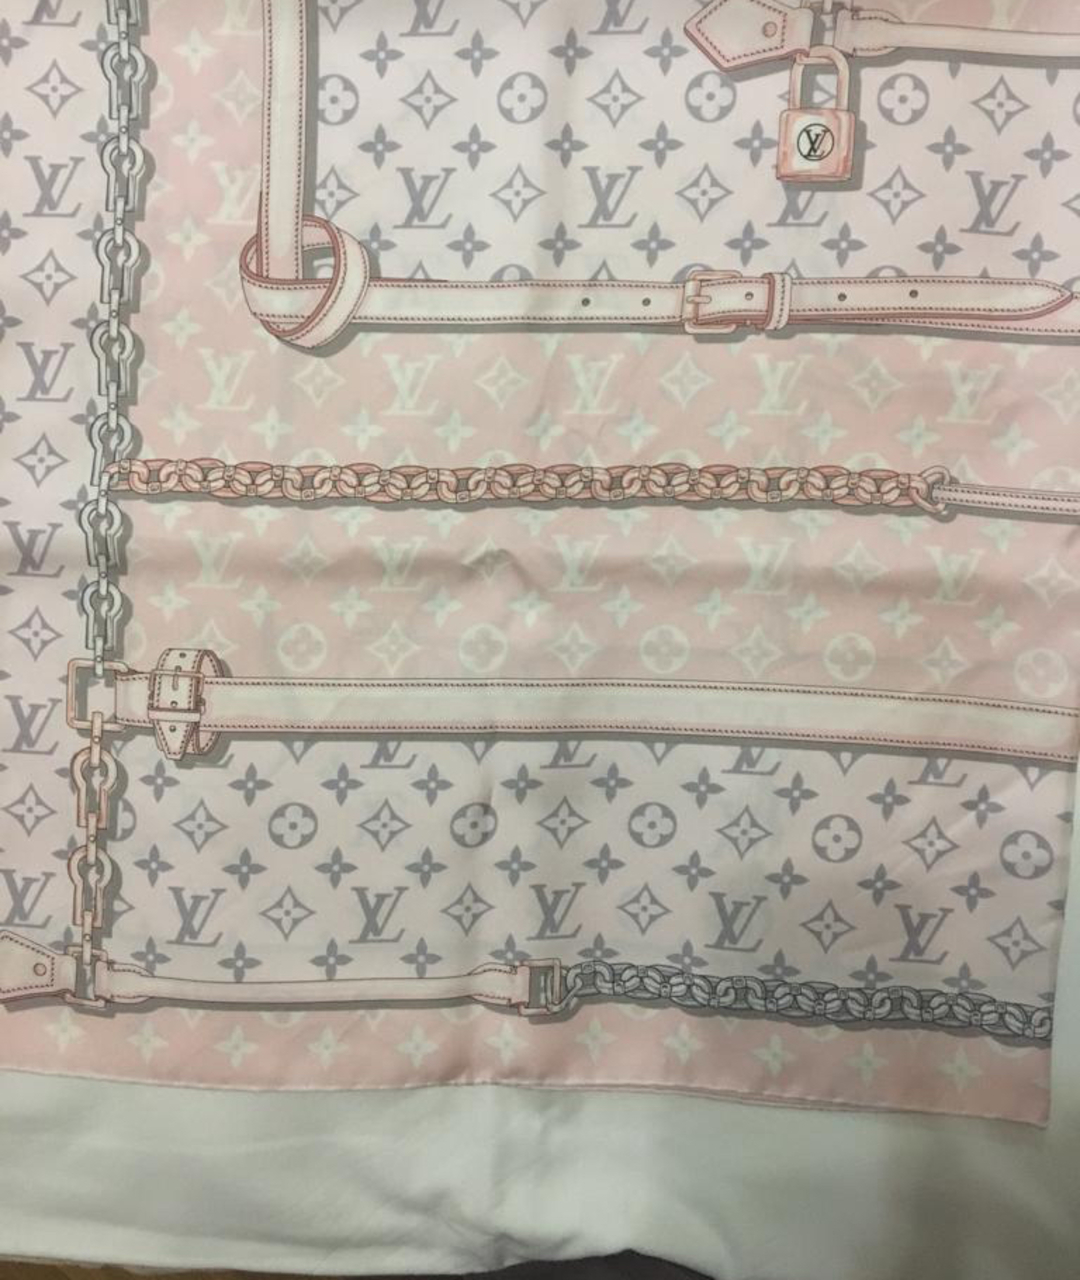 LOUIS VUITTON PRE-OWNED Розовый шелковый шарф, фото 2